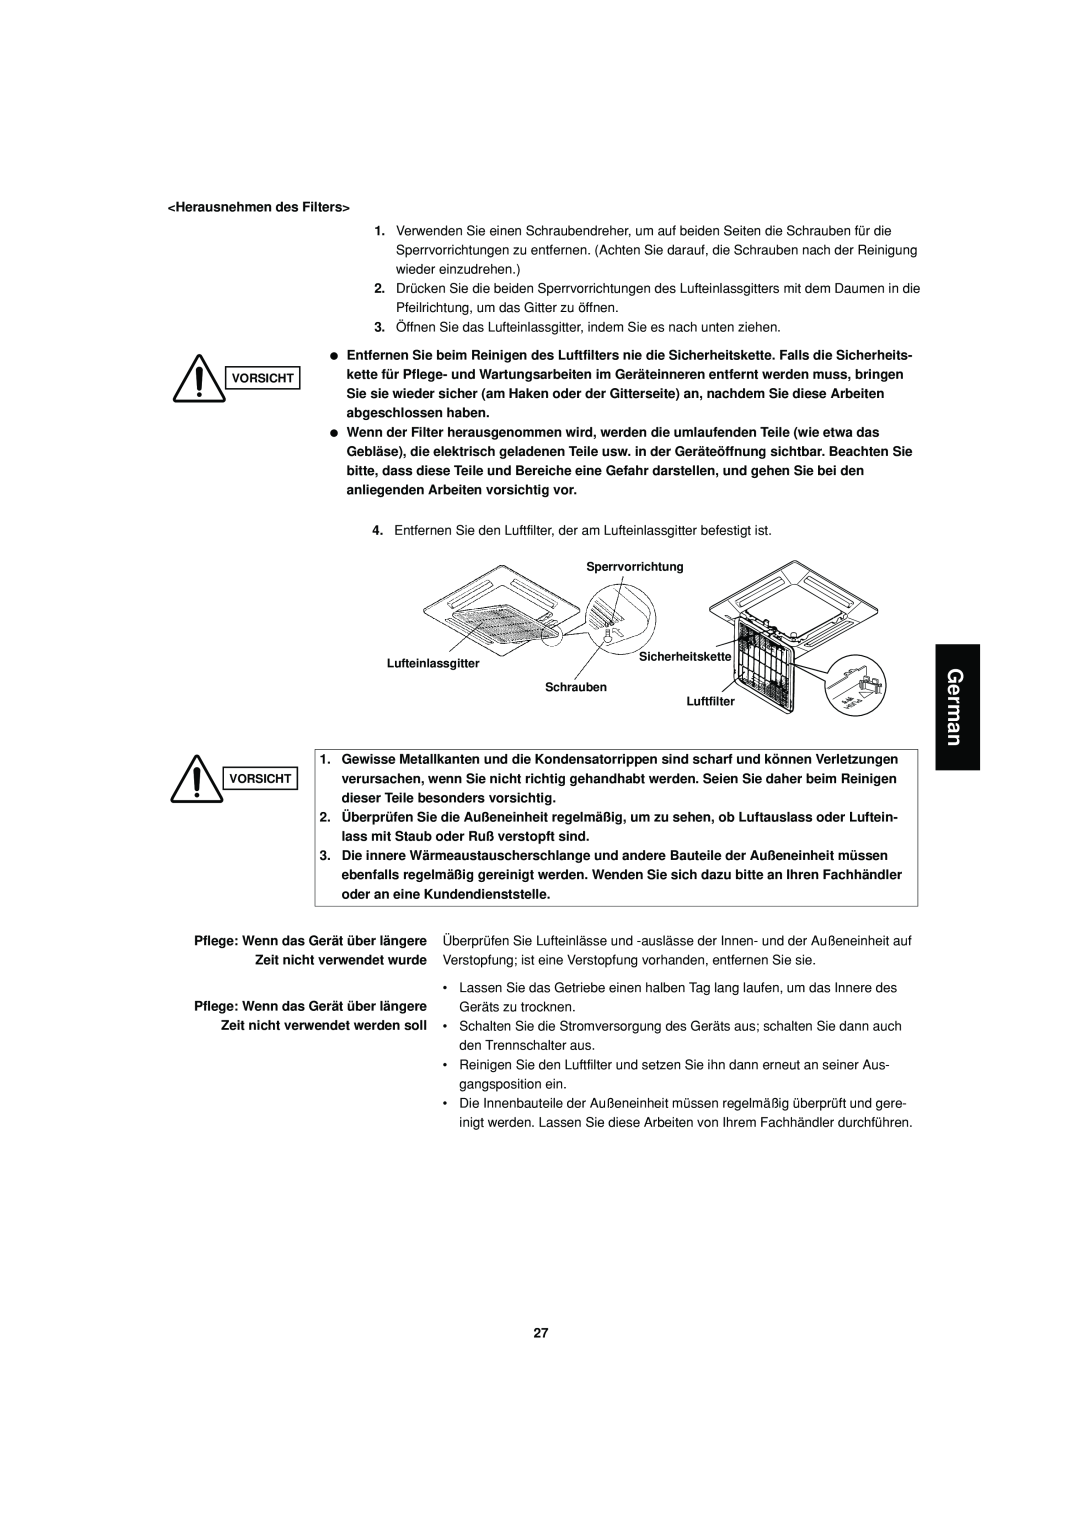 Sanyo SPW-XR254EH56 operation manual German, Herausnehmen des Filters 